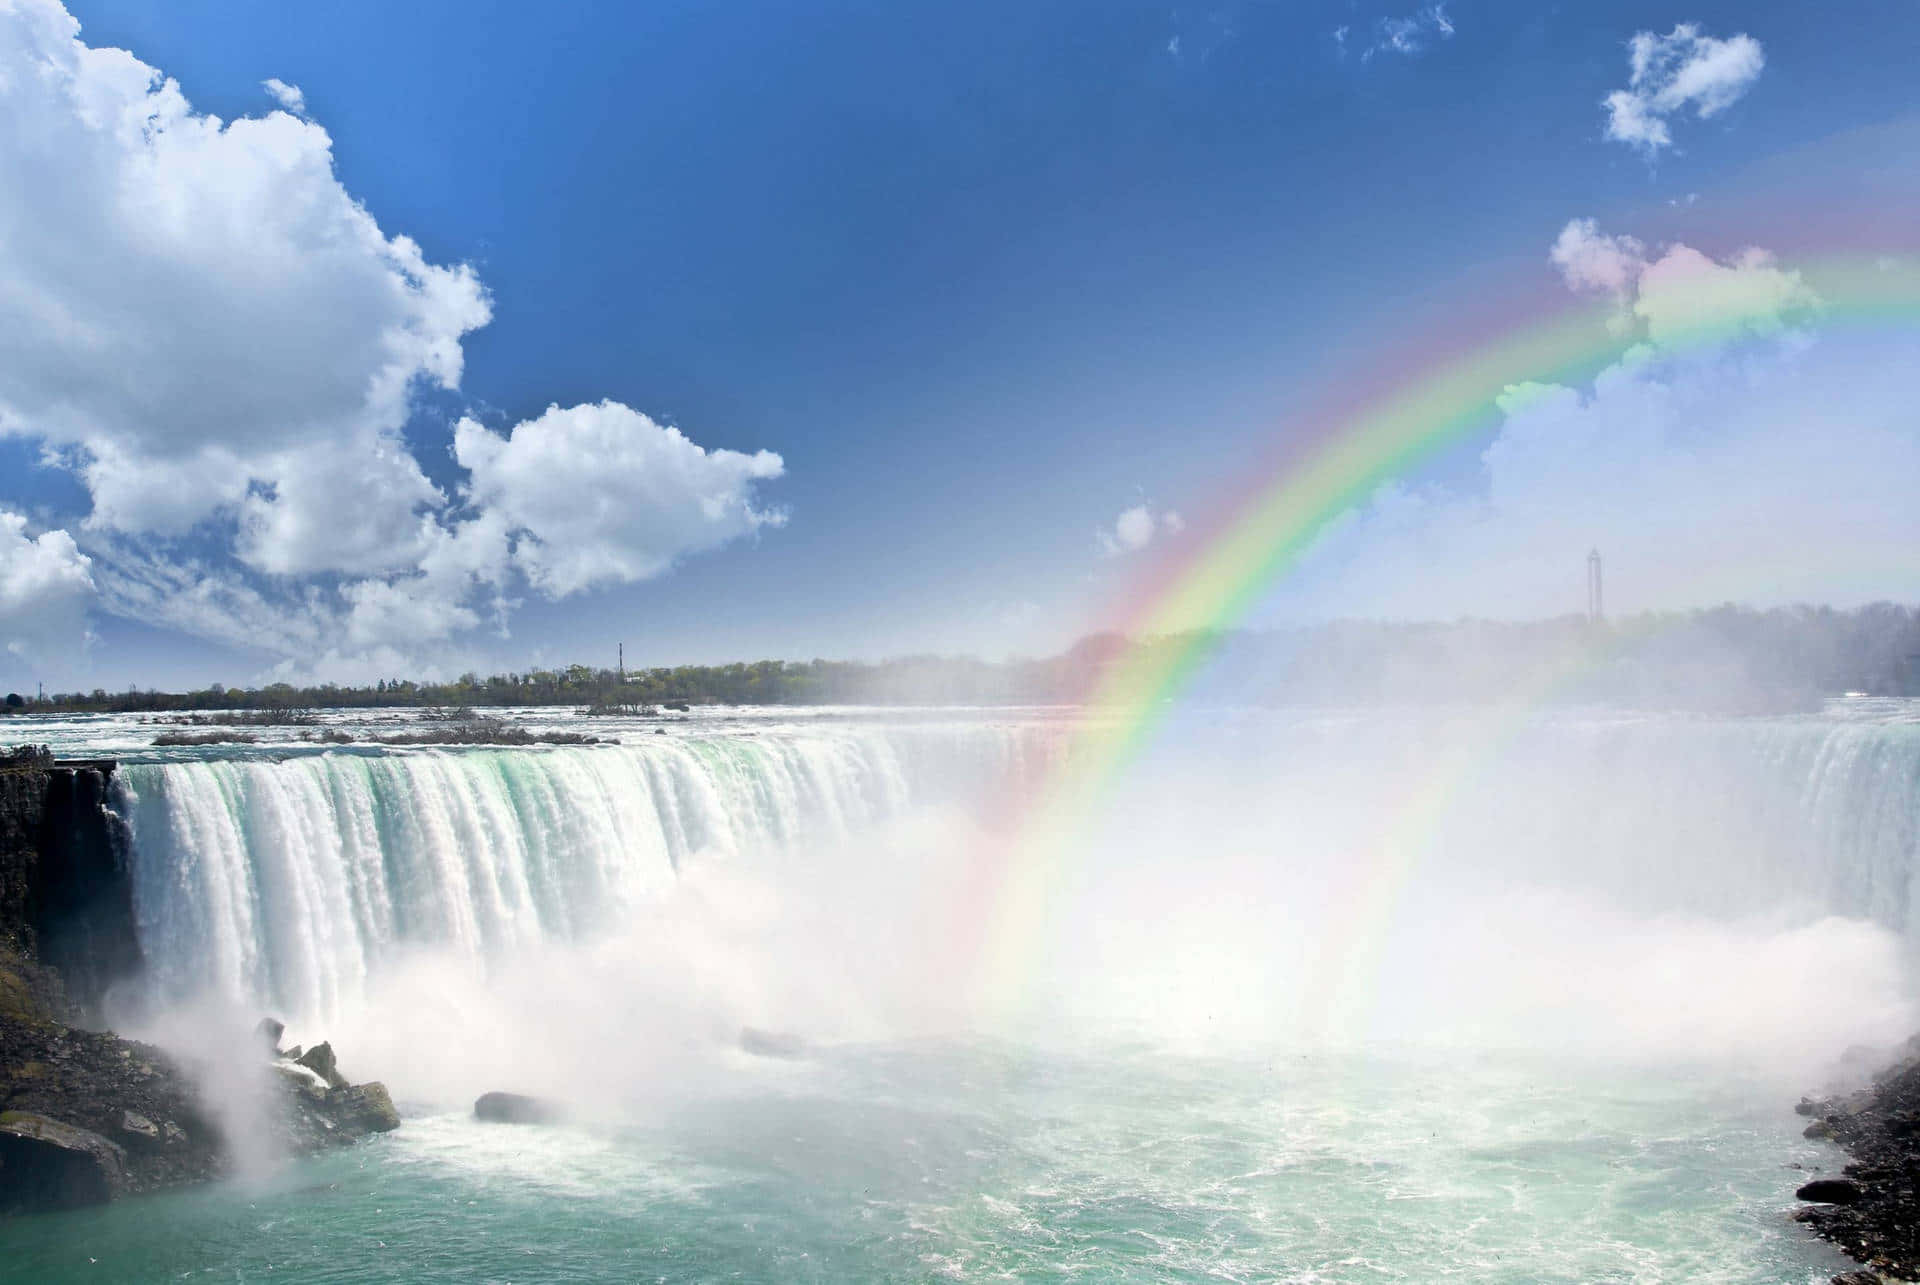 Niagara Falls With A Rainbow In The Sky